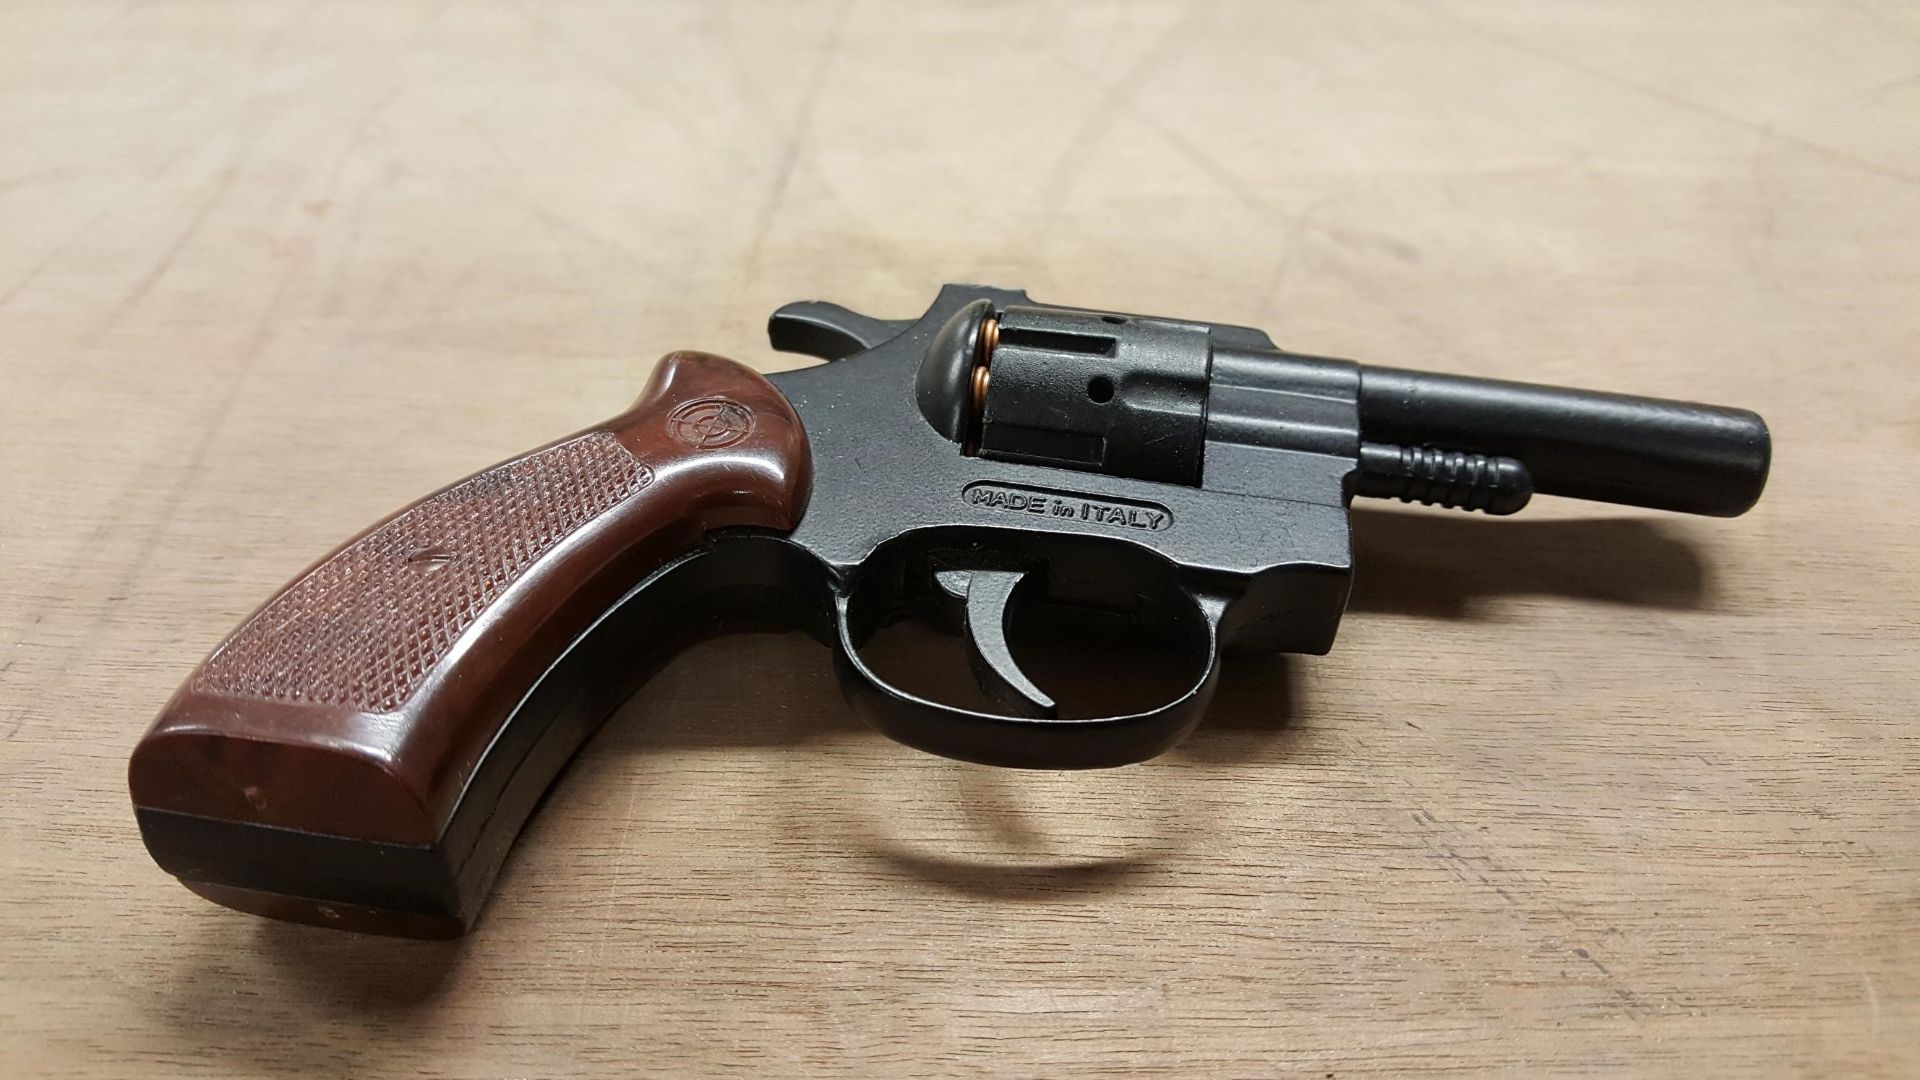 Phoenix Arms Co England starter pistol - Image 3 of 4